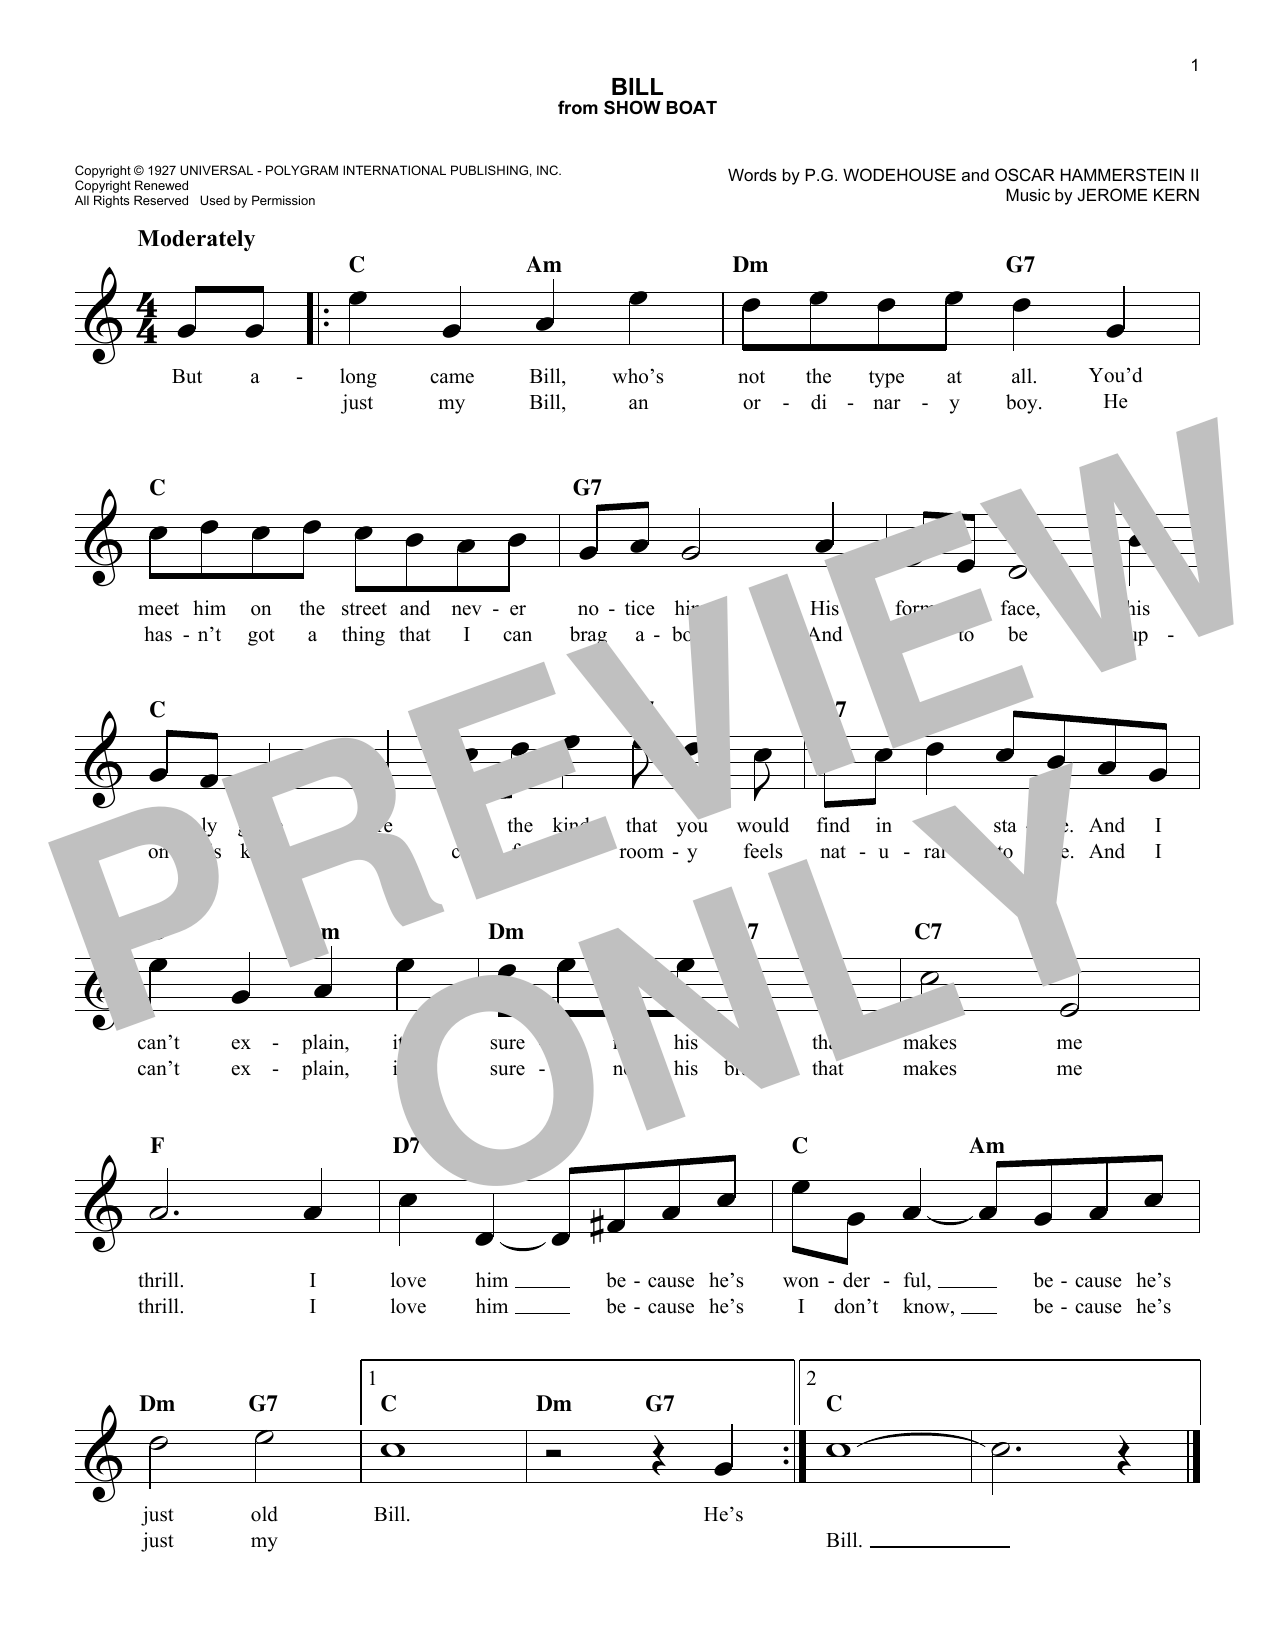 Oscar Hammerstein II Bill Sheet Music Notes & Chords for Melody Line, Lyrics & Chords - Download or Print PDF